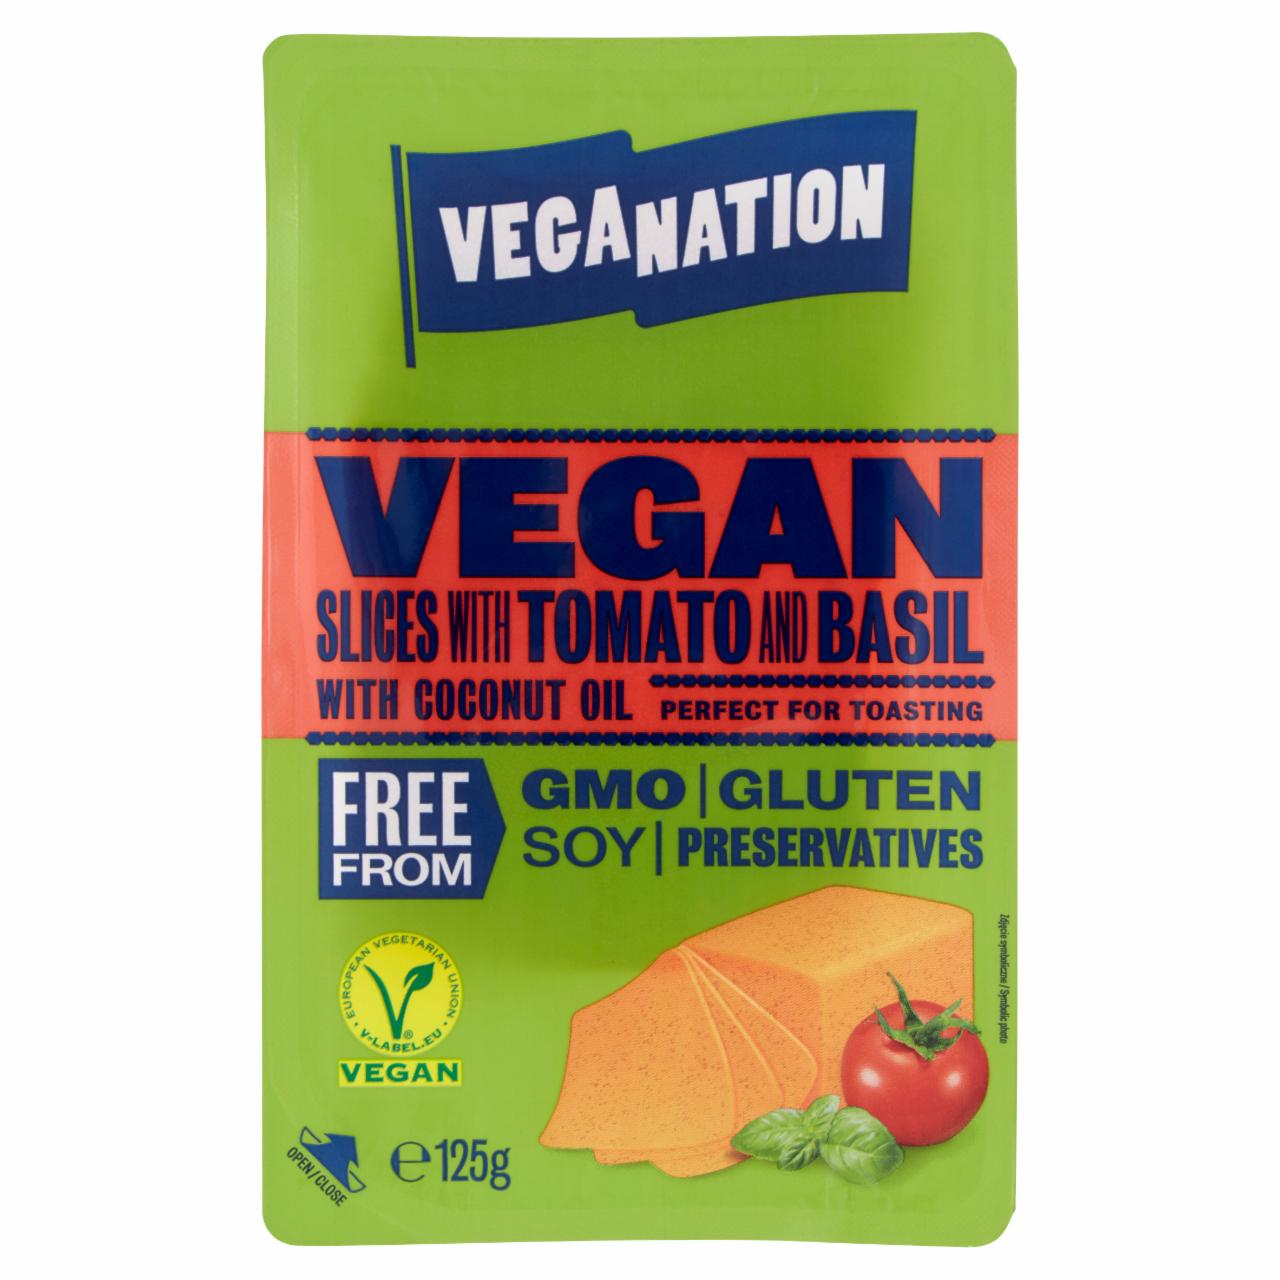 Fotografie - Vegan Slices with Tomato and Basil Veganation